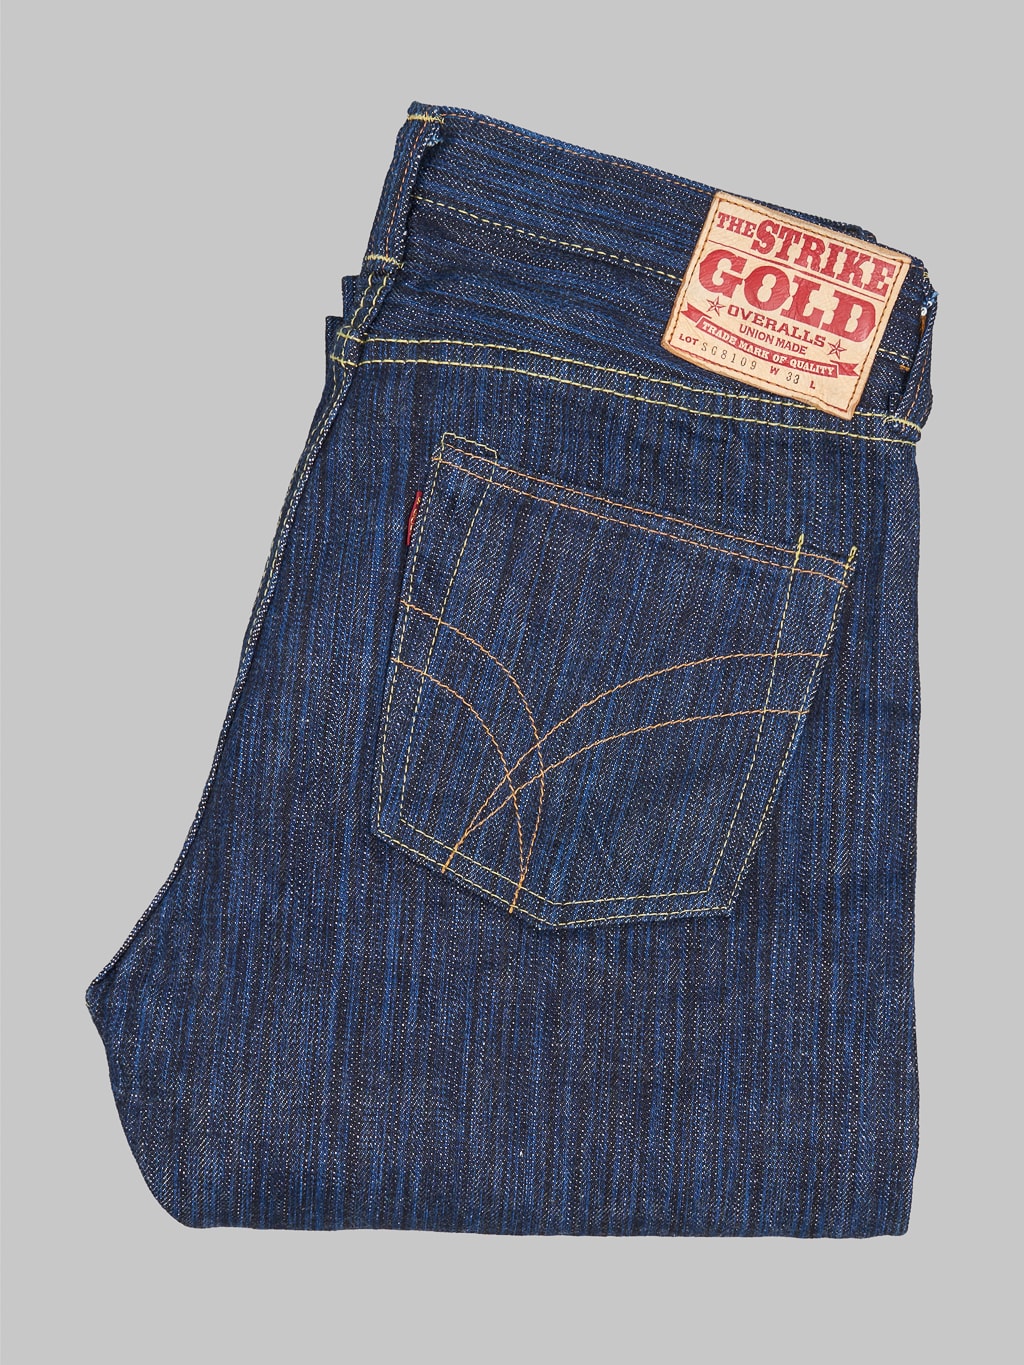 The Strike Gold 8109 "Shower Slub" Slim Tapered Jeans